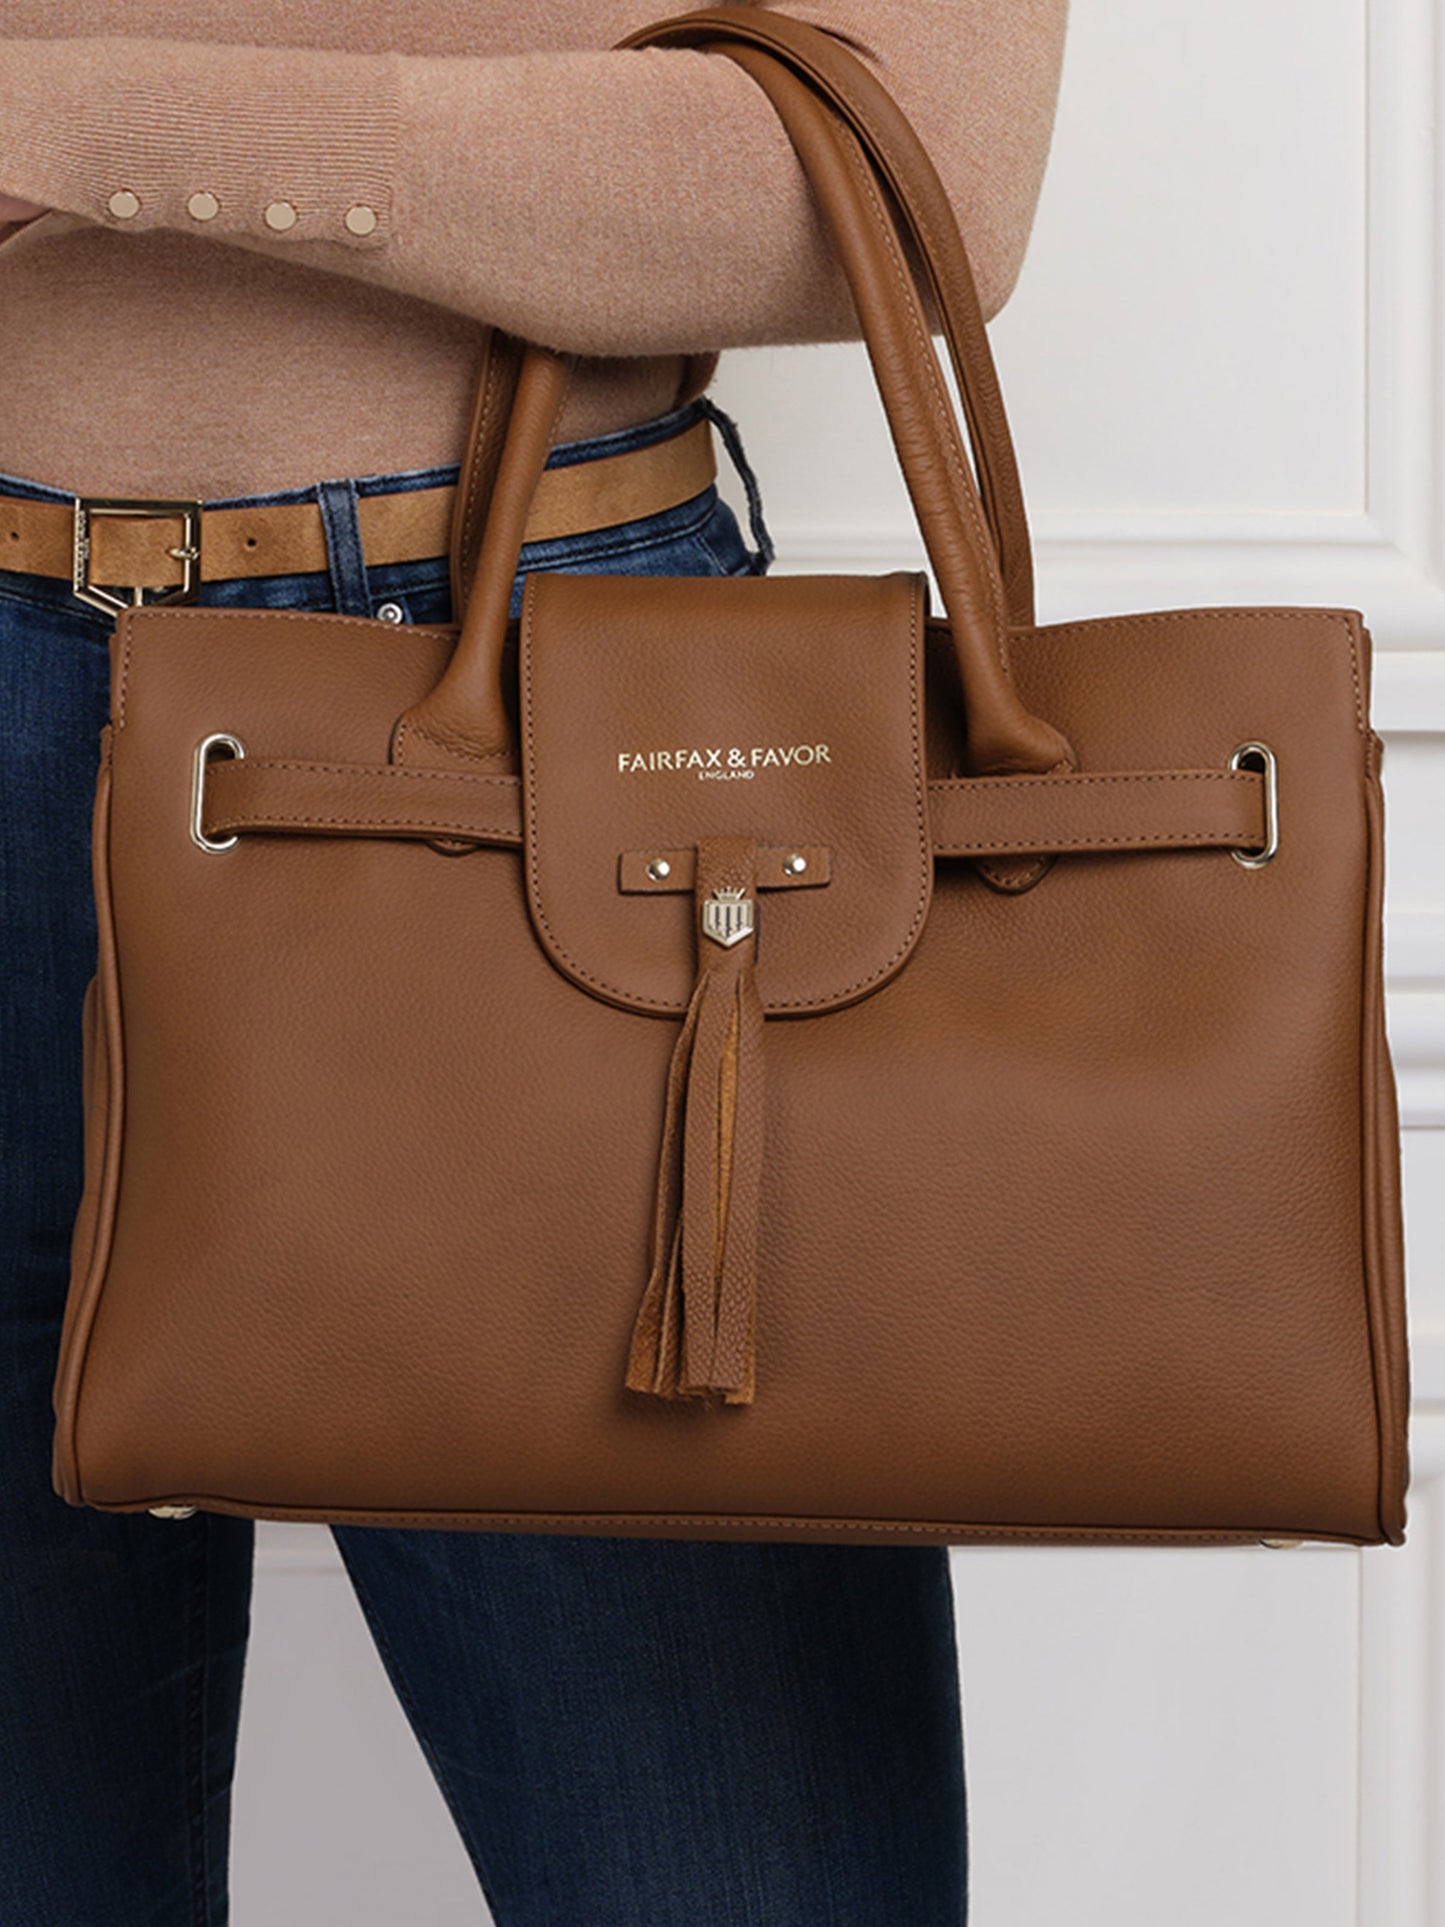 The Windsor Handbag - Tan Leather